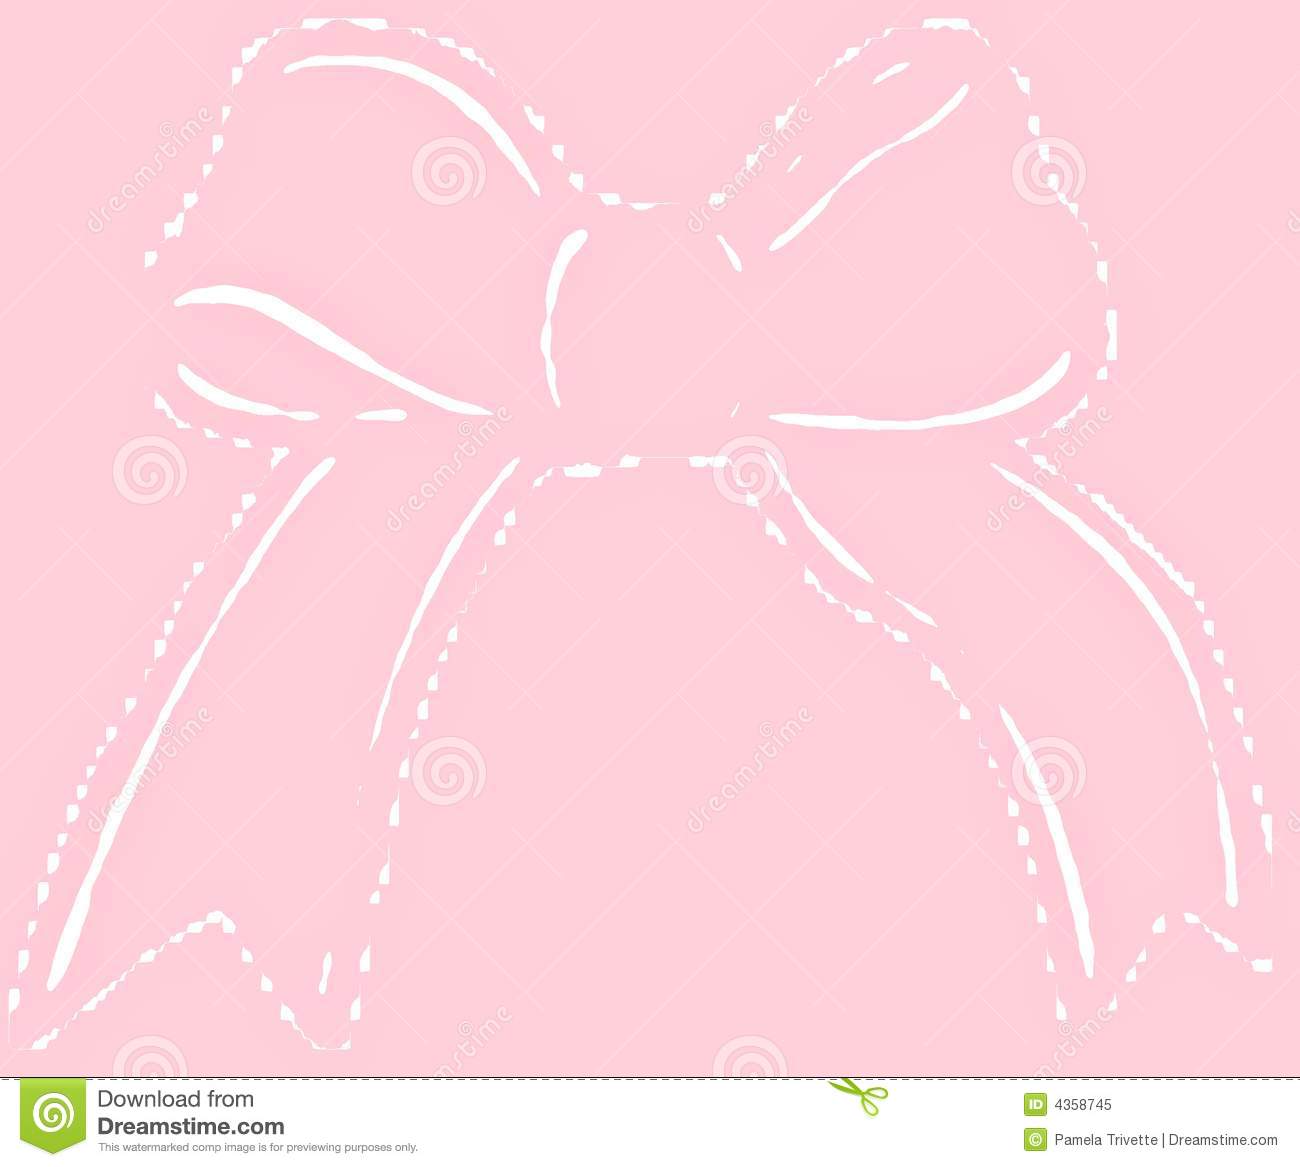 White Bow On Pink Background Royalty Free Stock Photo   Image  4358745